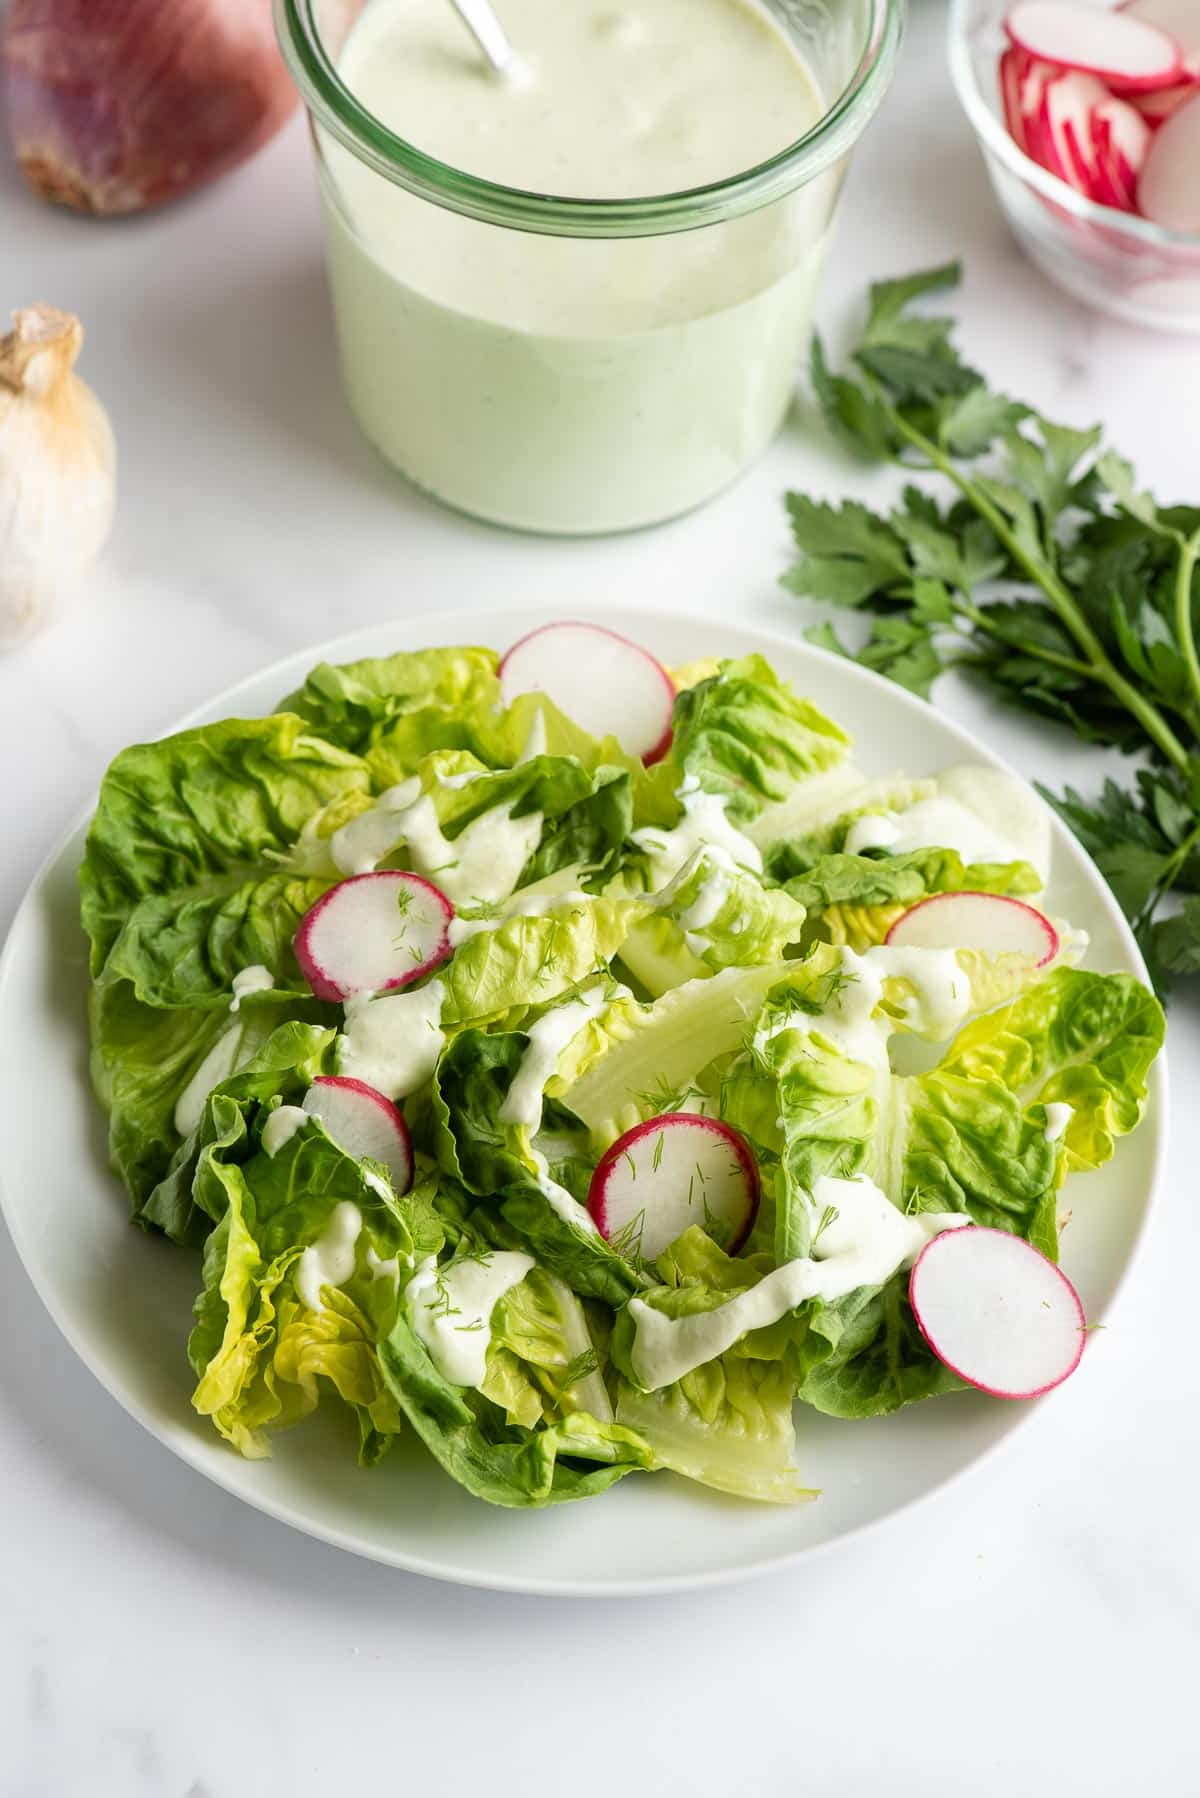 Green Goddess Dressing on a fresh lettuce salad on a white plate